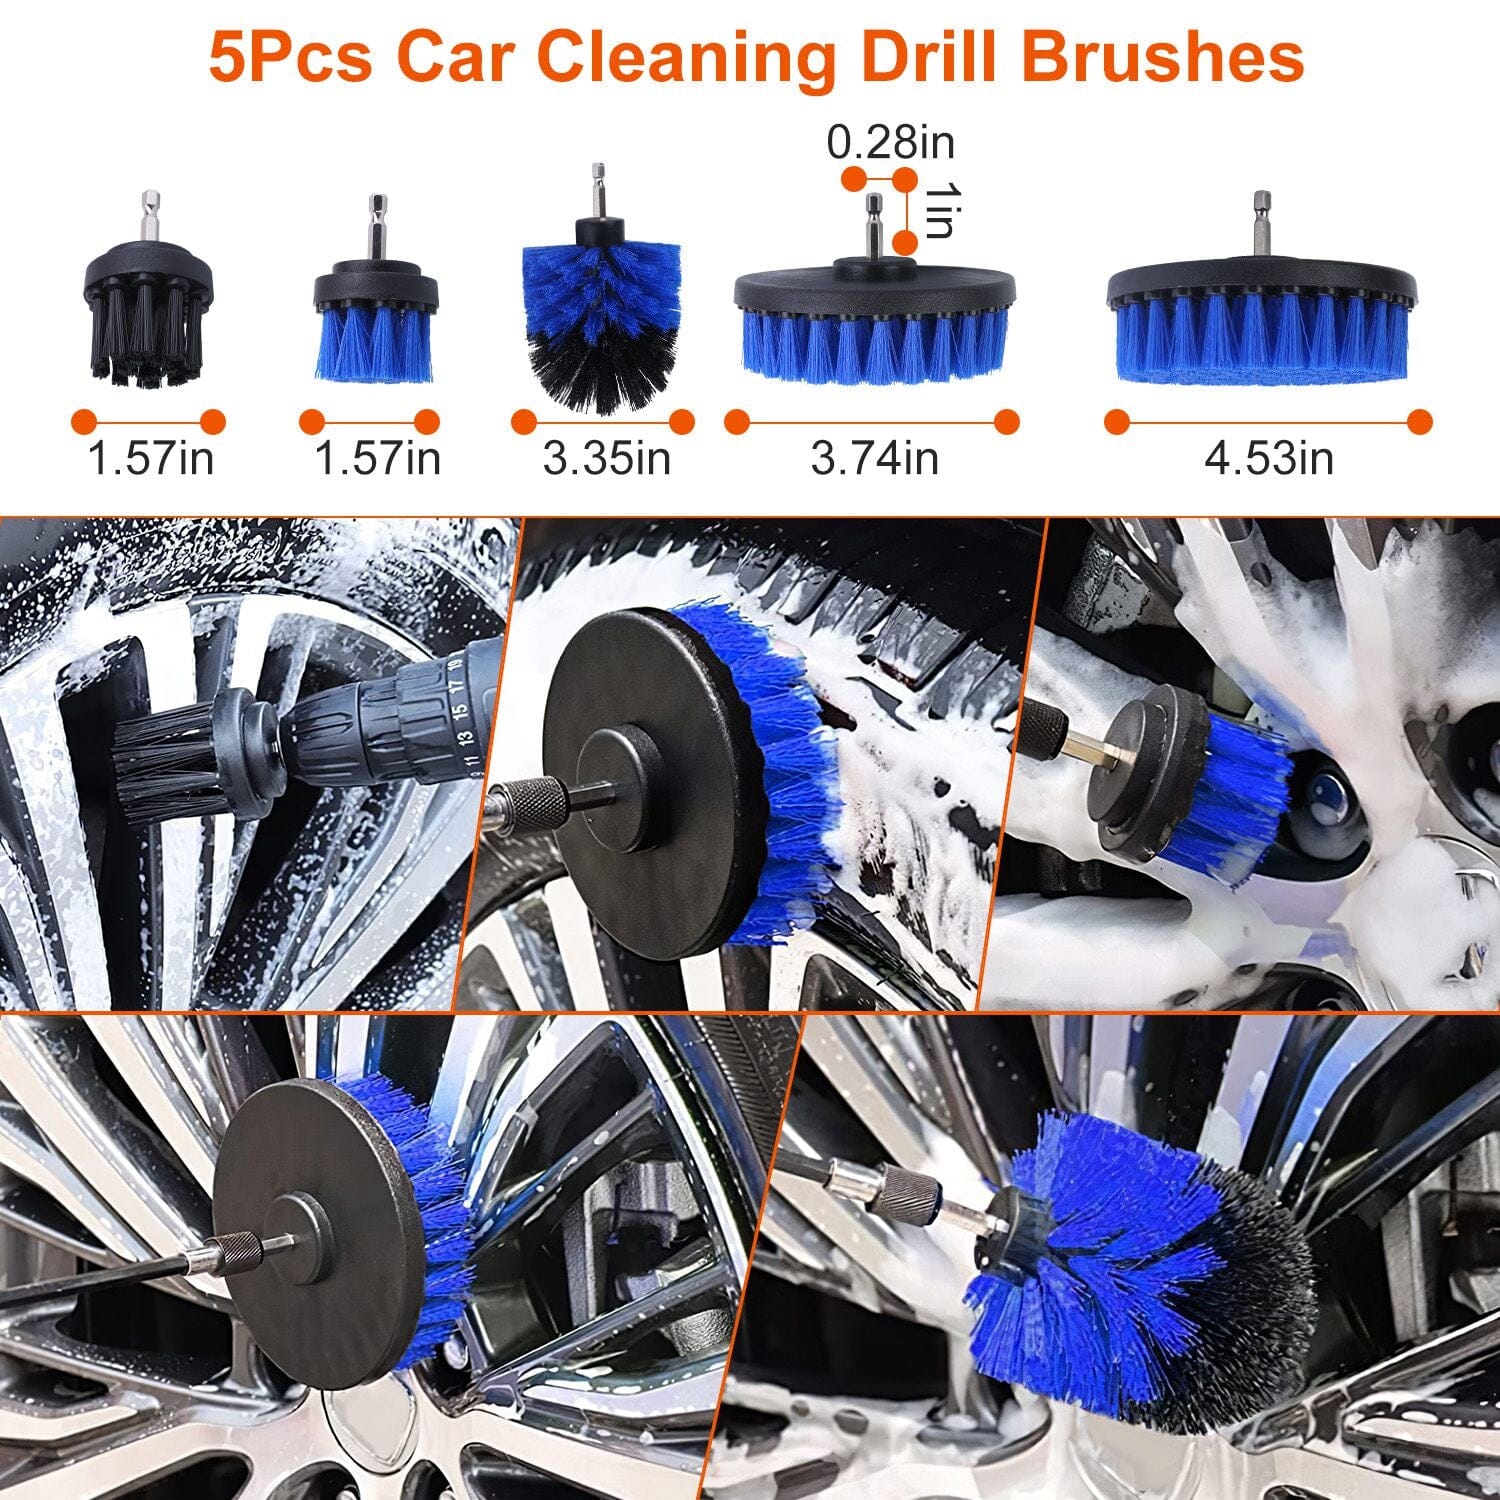 5pcs Car Detailing Brush Set